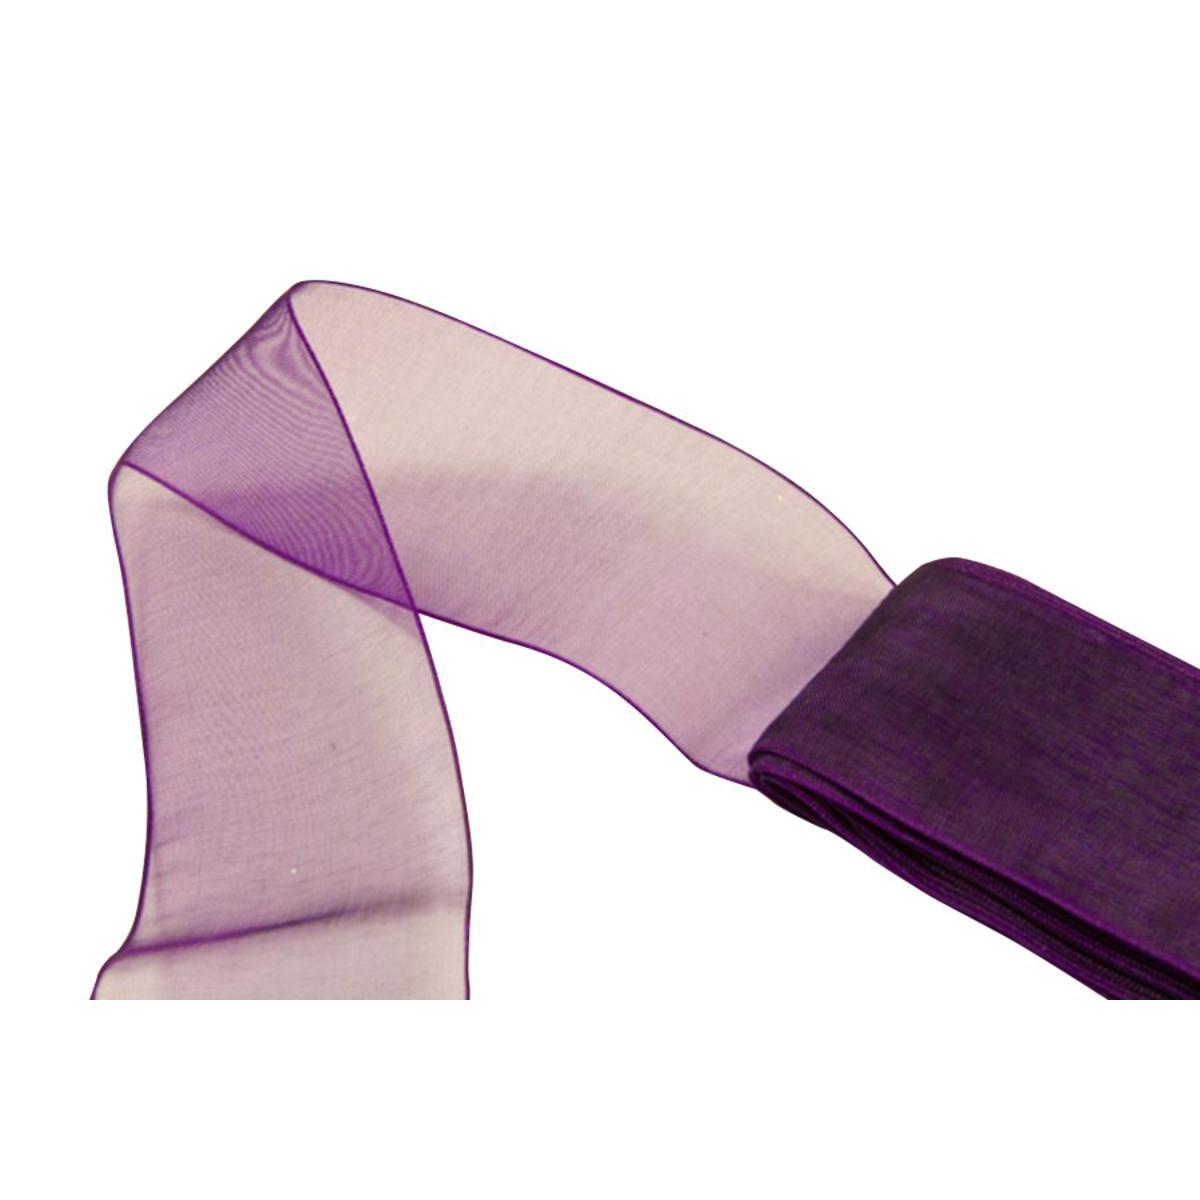 Ruban en organza - 40 mm x 3 m - Violet prune